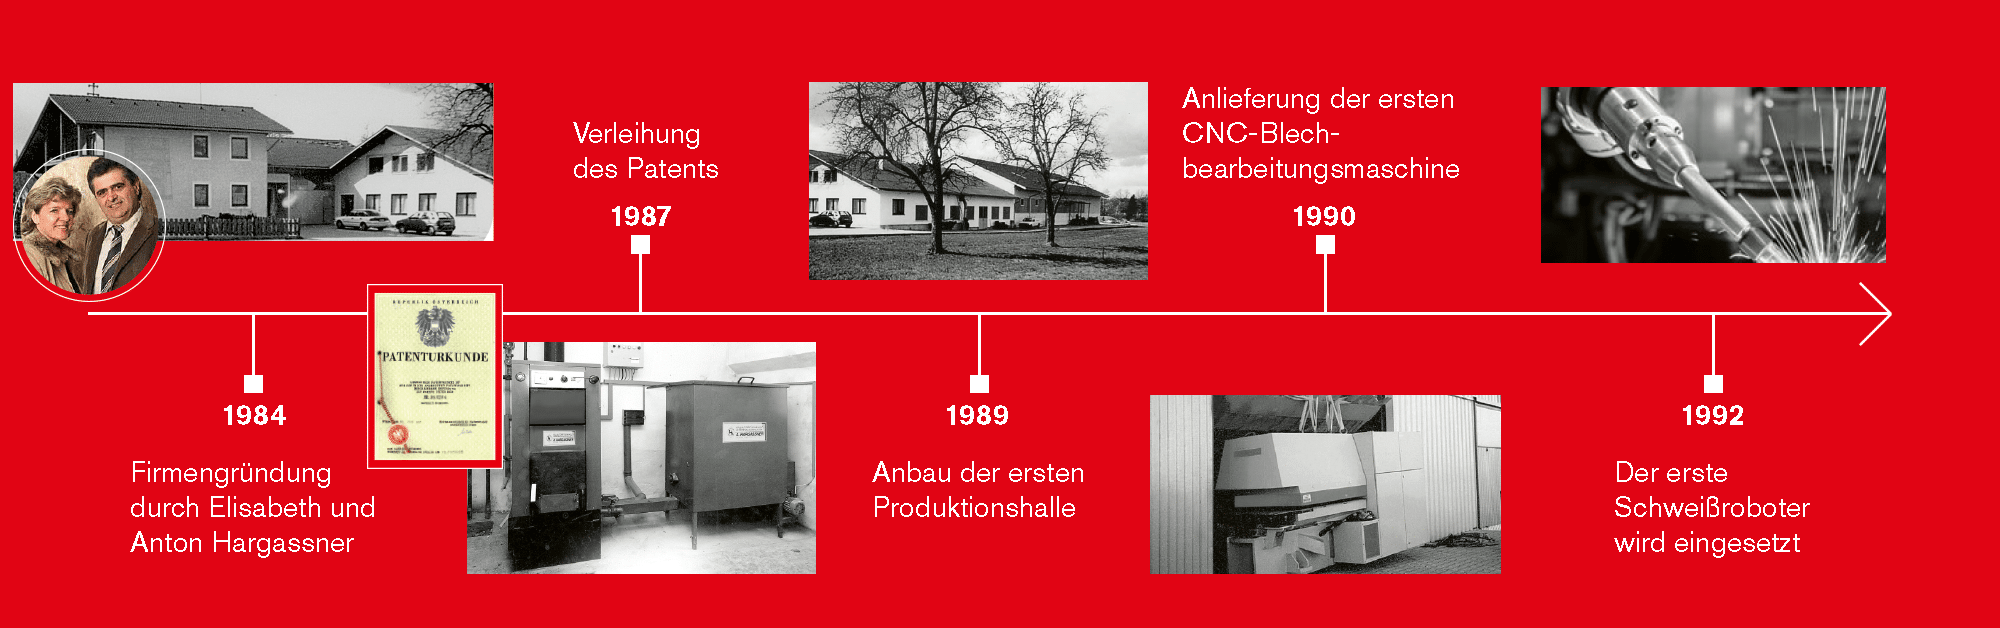 Hargassner Geschichte Timeline 1984 bis 1992 | Hargassner